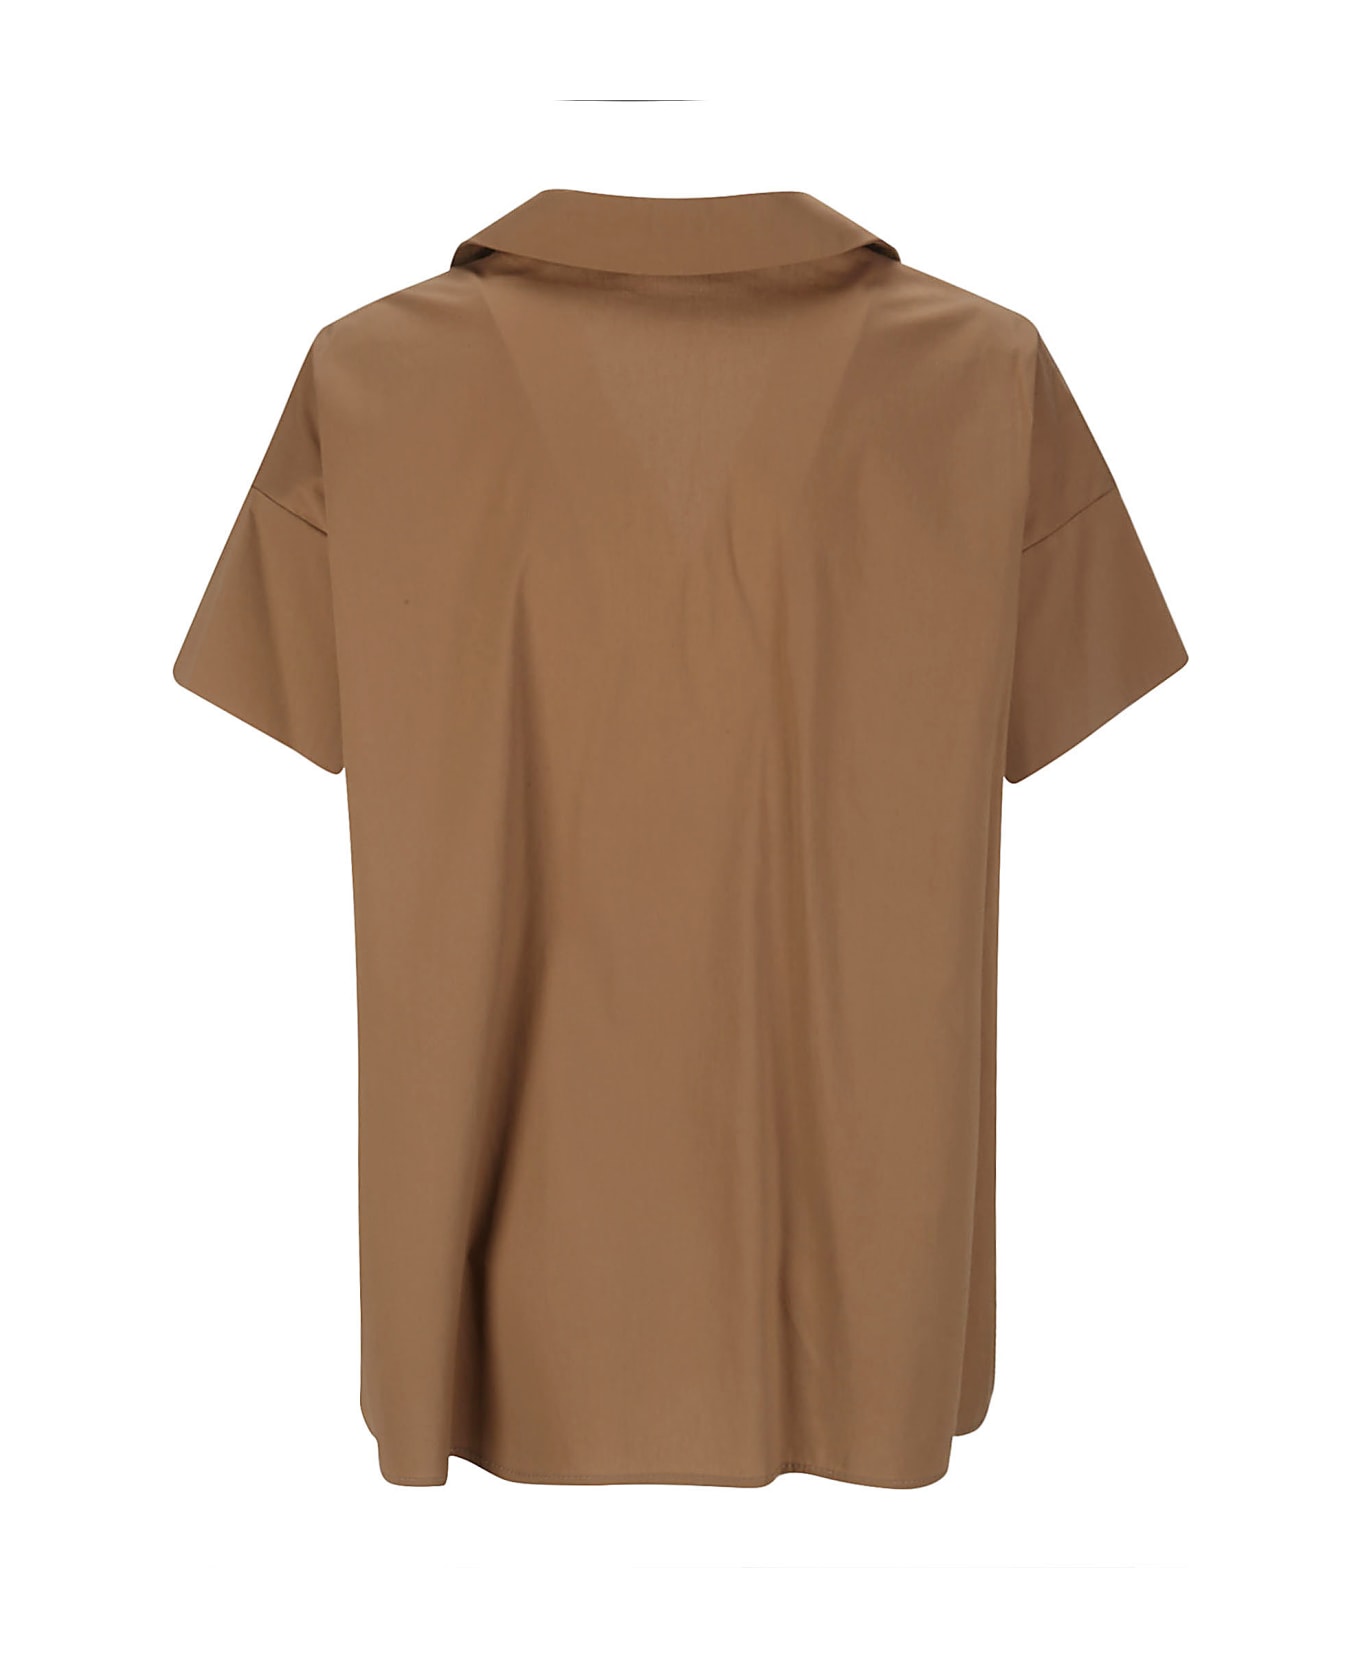 Hira Large Cotton Shirt Without Buttons - COGNAC